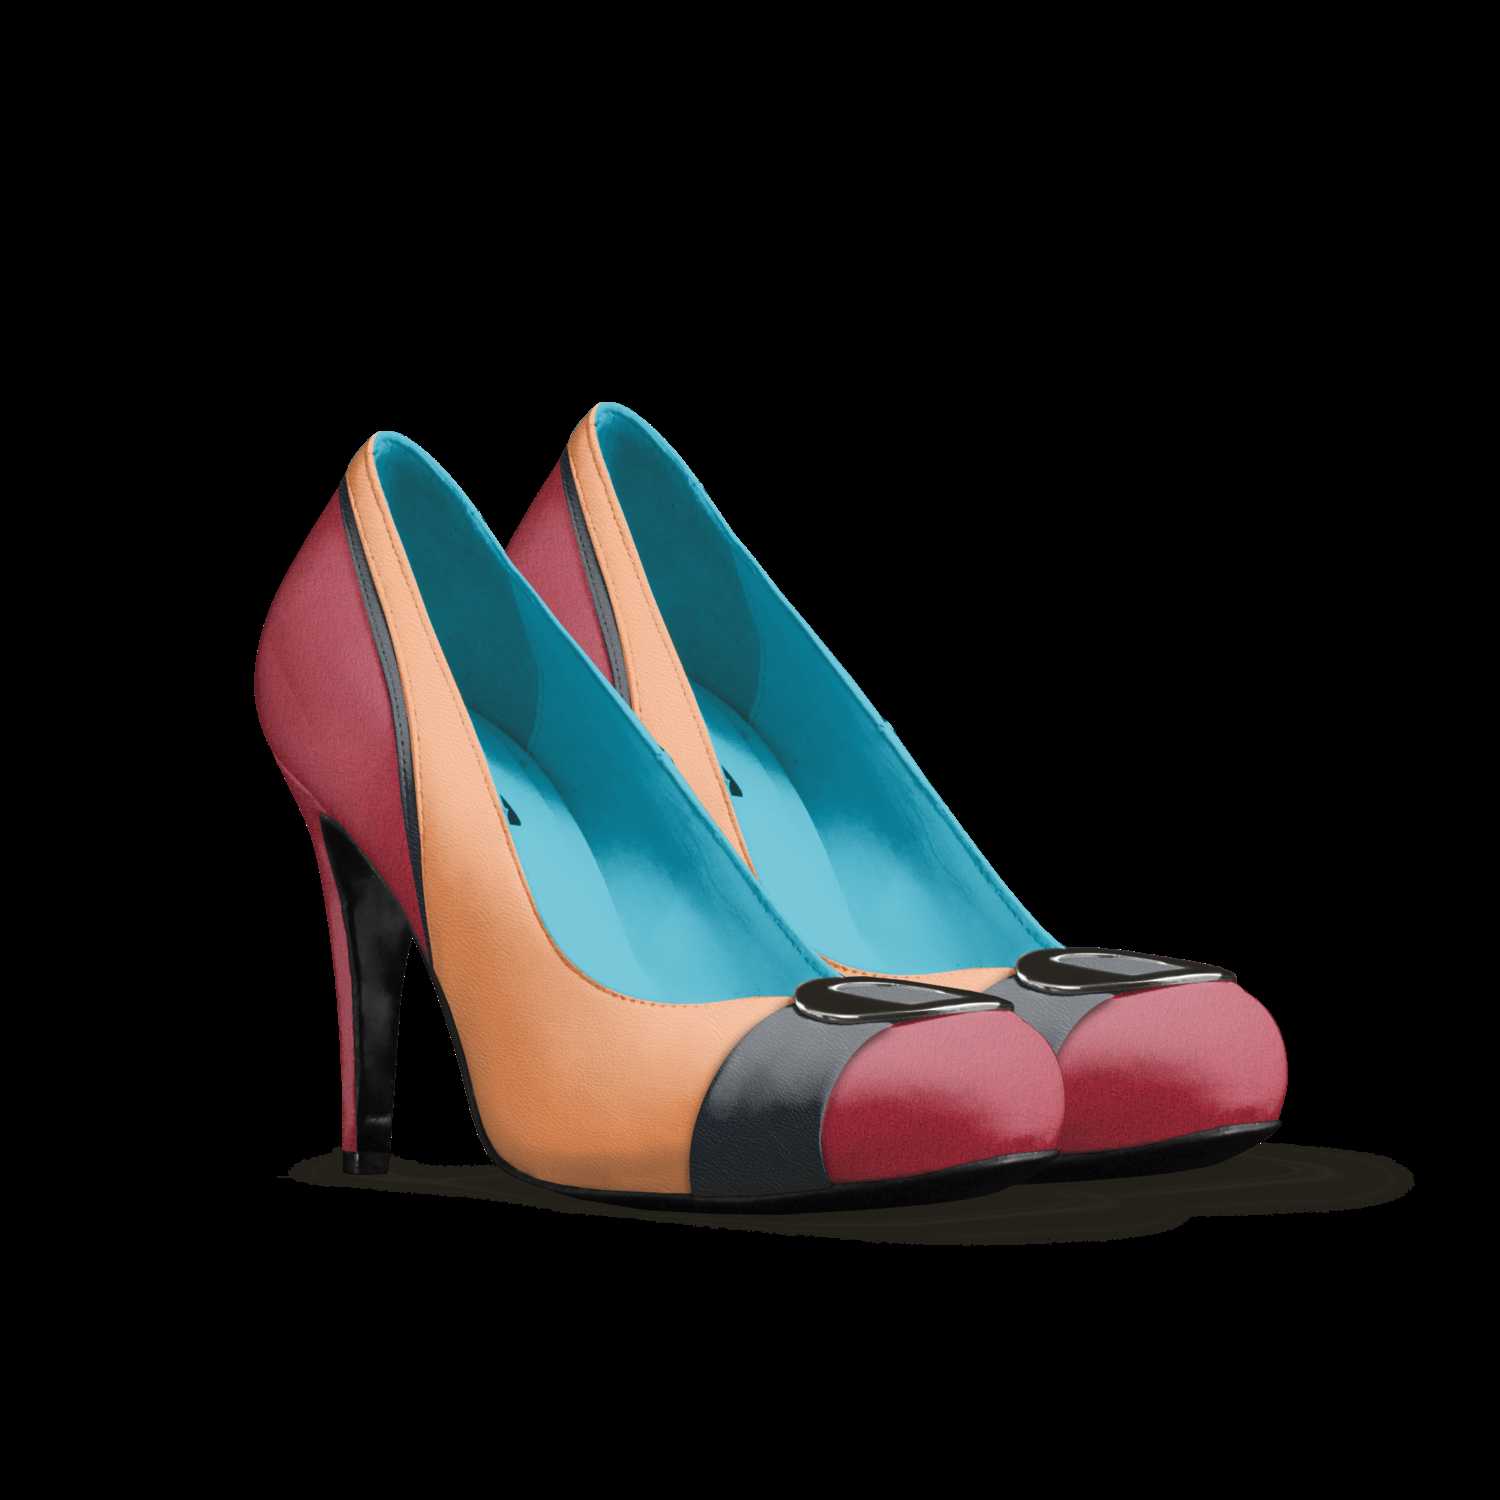 A Custom Shoe concept by Audrey Brooks